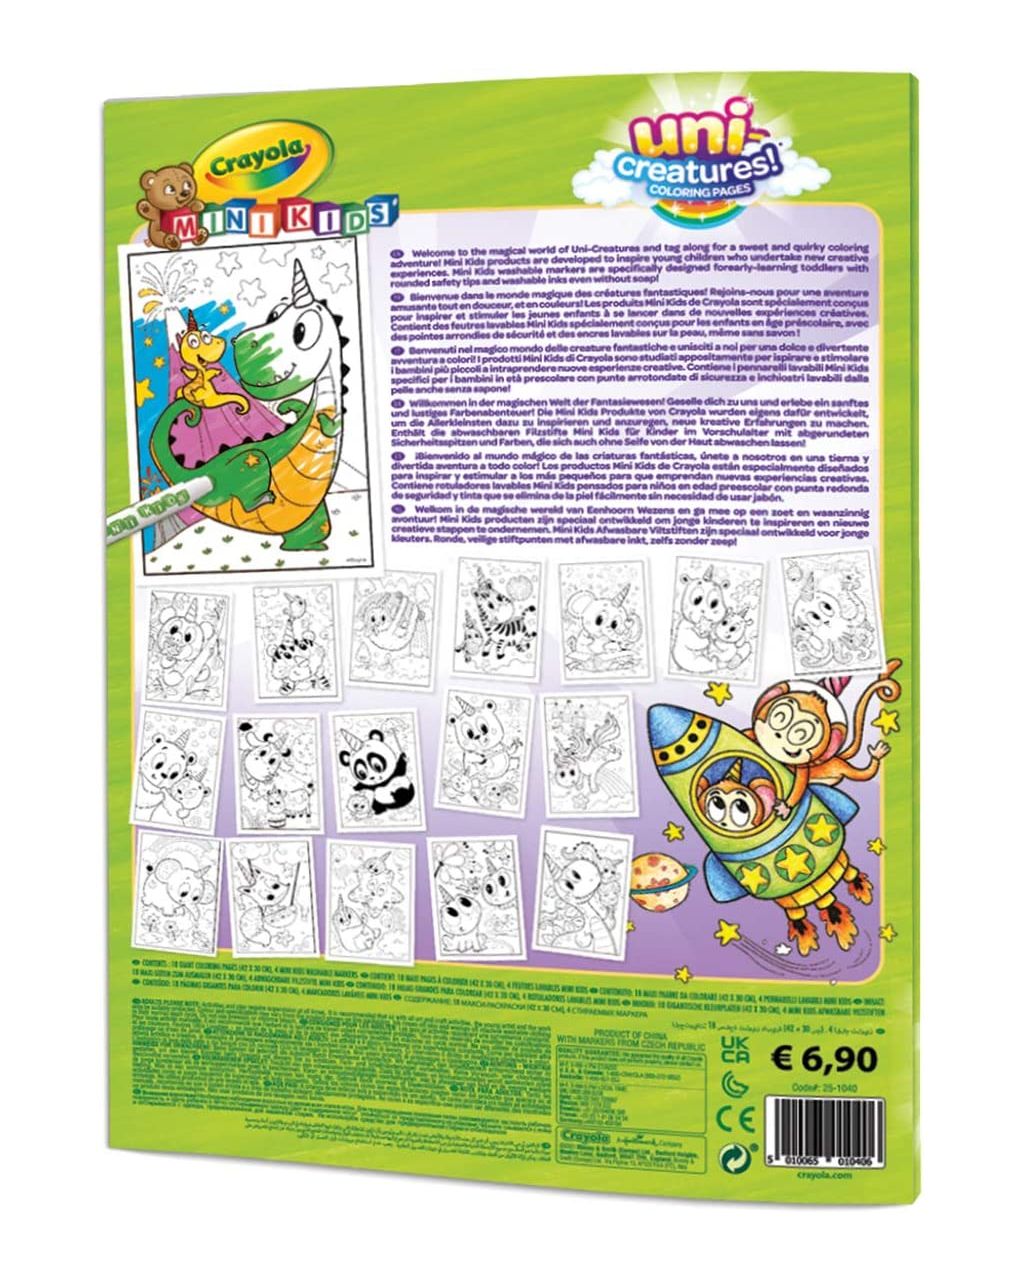 Set maxi pagine da colorare uni-creatures e pennarelli lavabili - crayola mini kids - Crayola